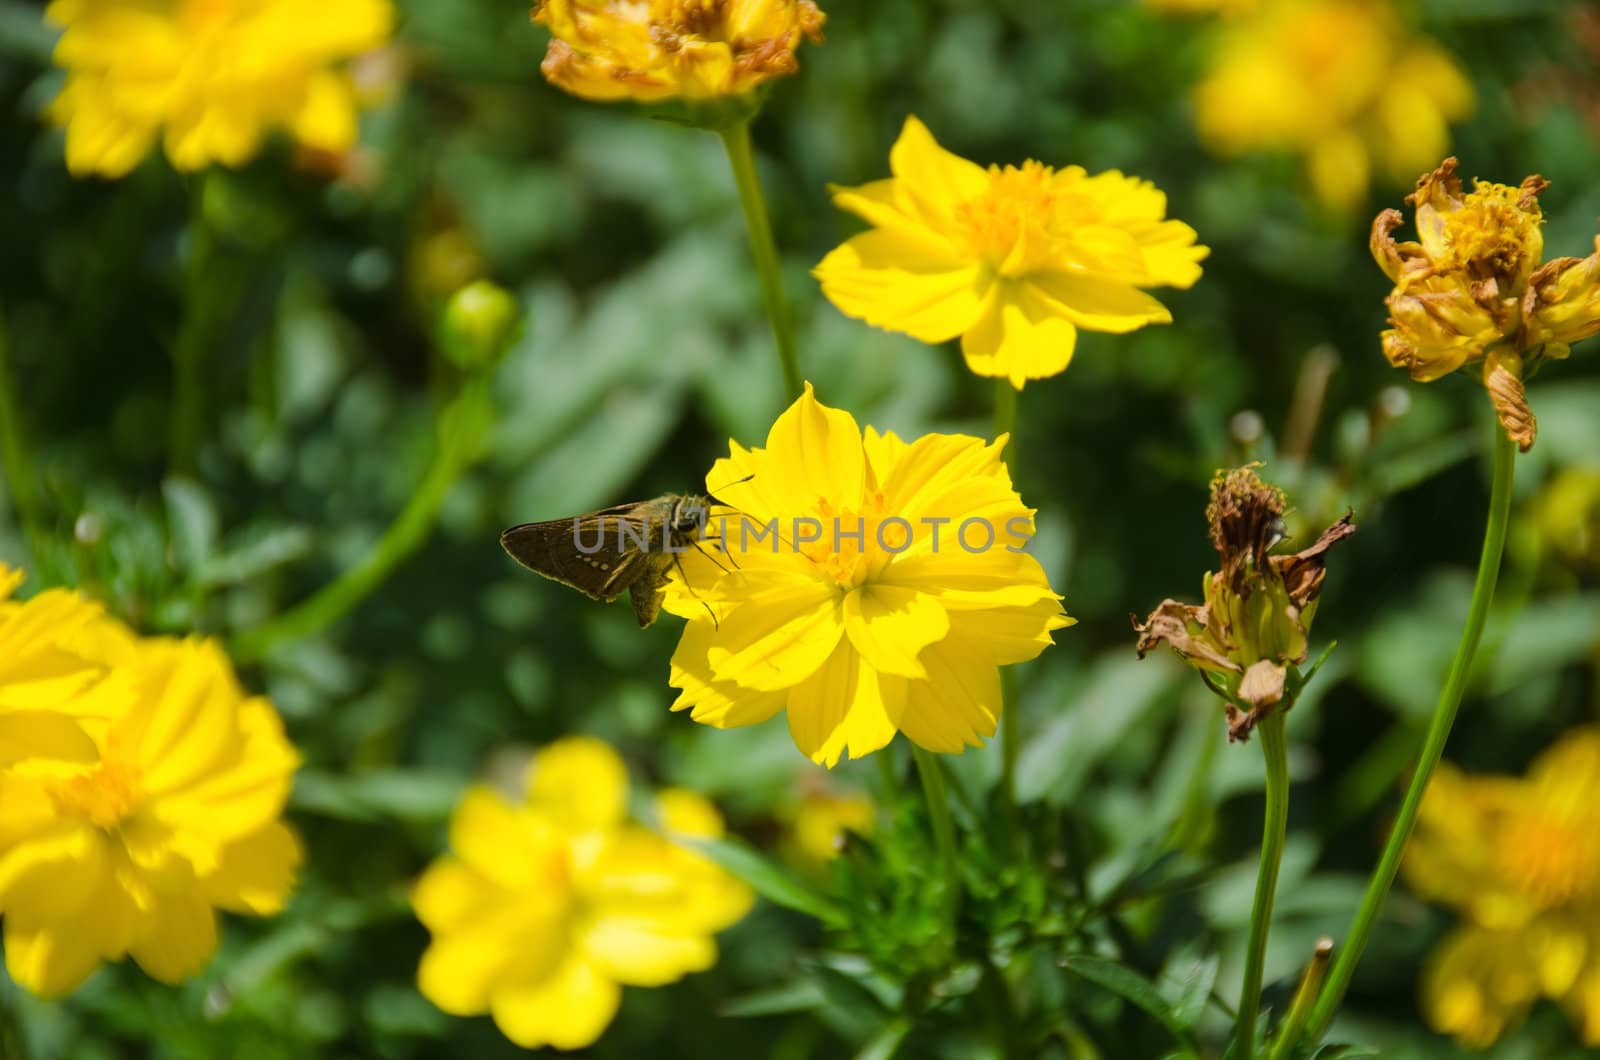 Butterfly drinking nectar on Yellow Cosmos flower, Cosmos sulphureus